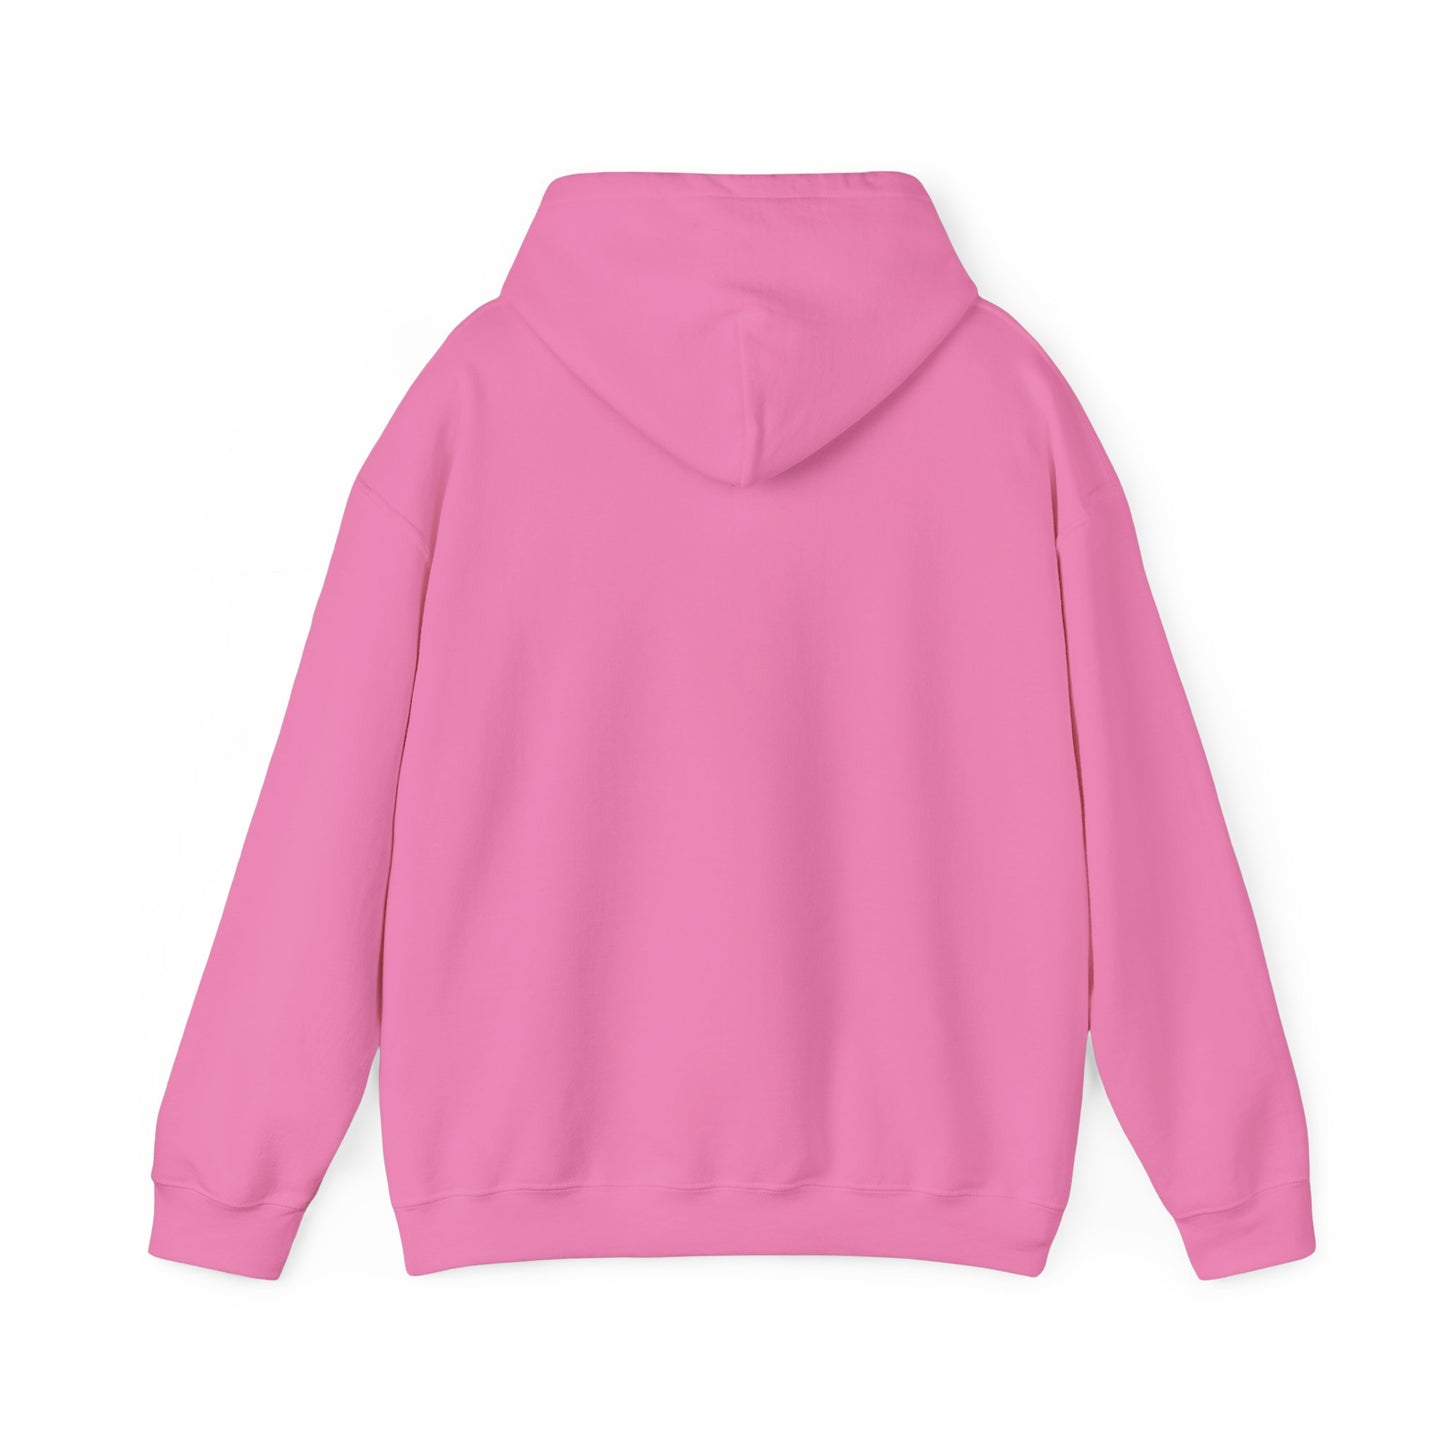 "Automobiliá de Chiroptera" Single Print Unisex Heavy Blend™ Hooded Sweatshirt